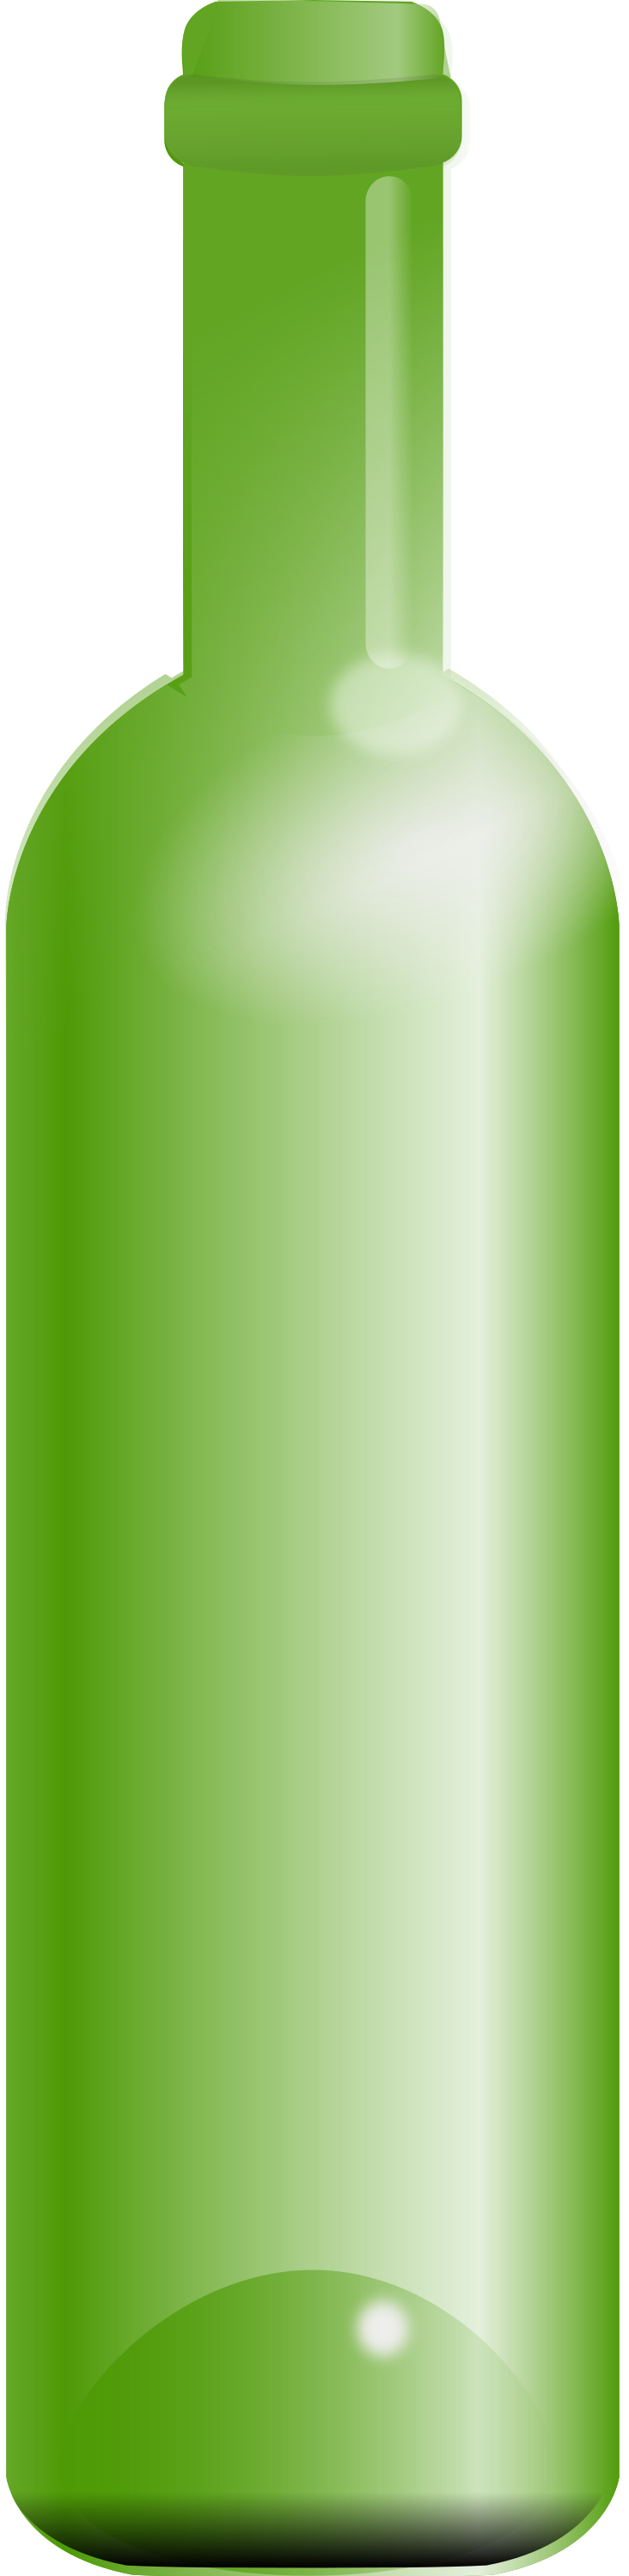 Bottle free stock photo illustration of a green wine bottle clipart